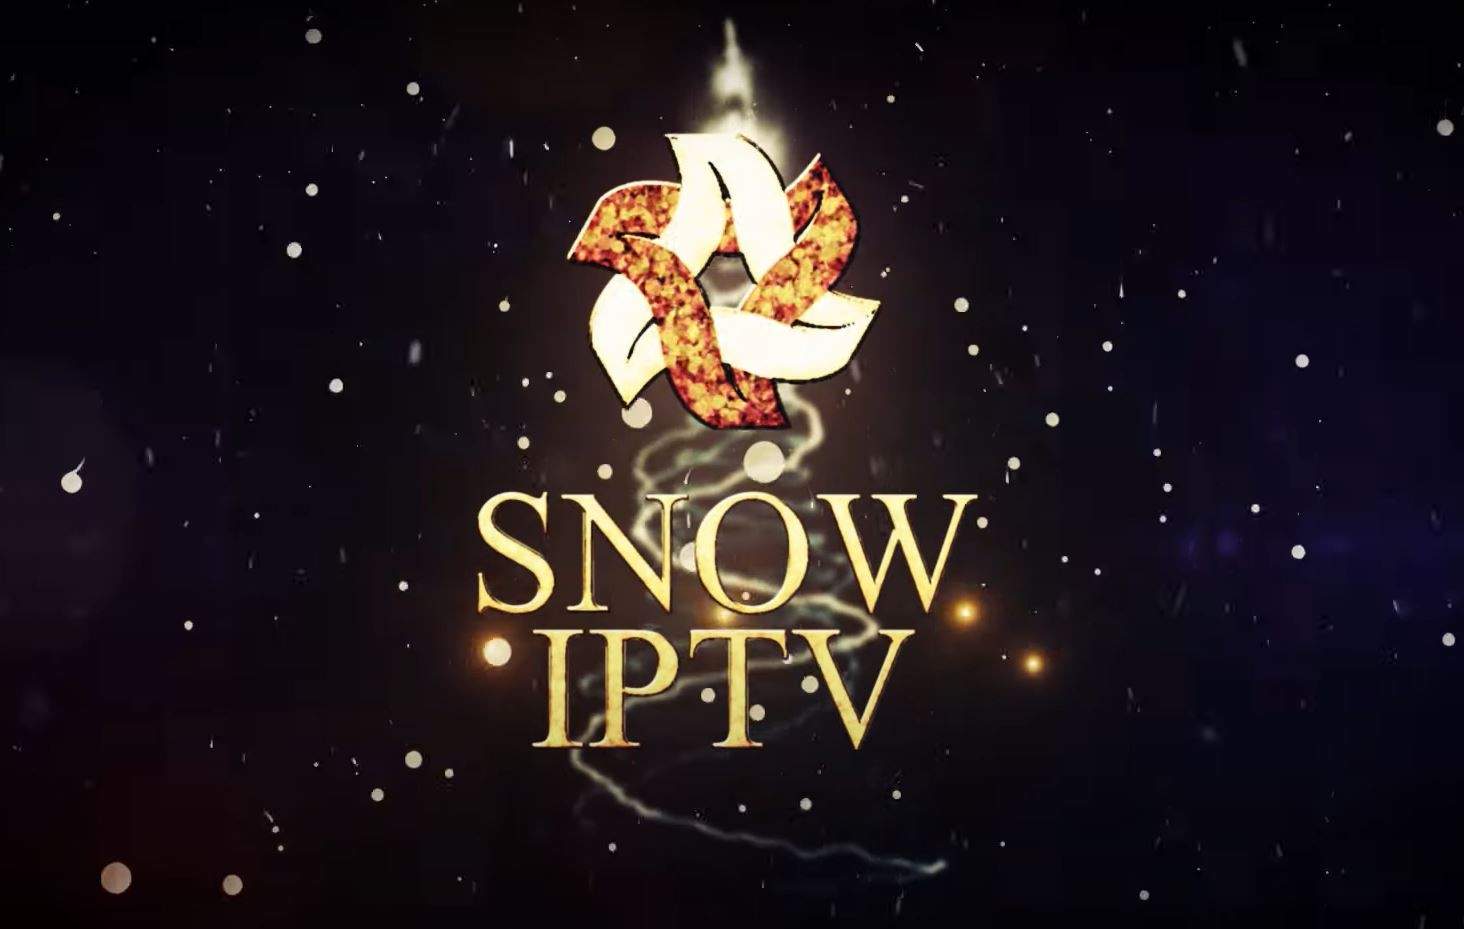 (c) Snow-tv.net